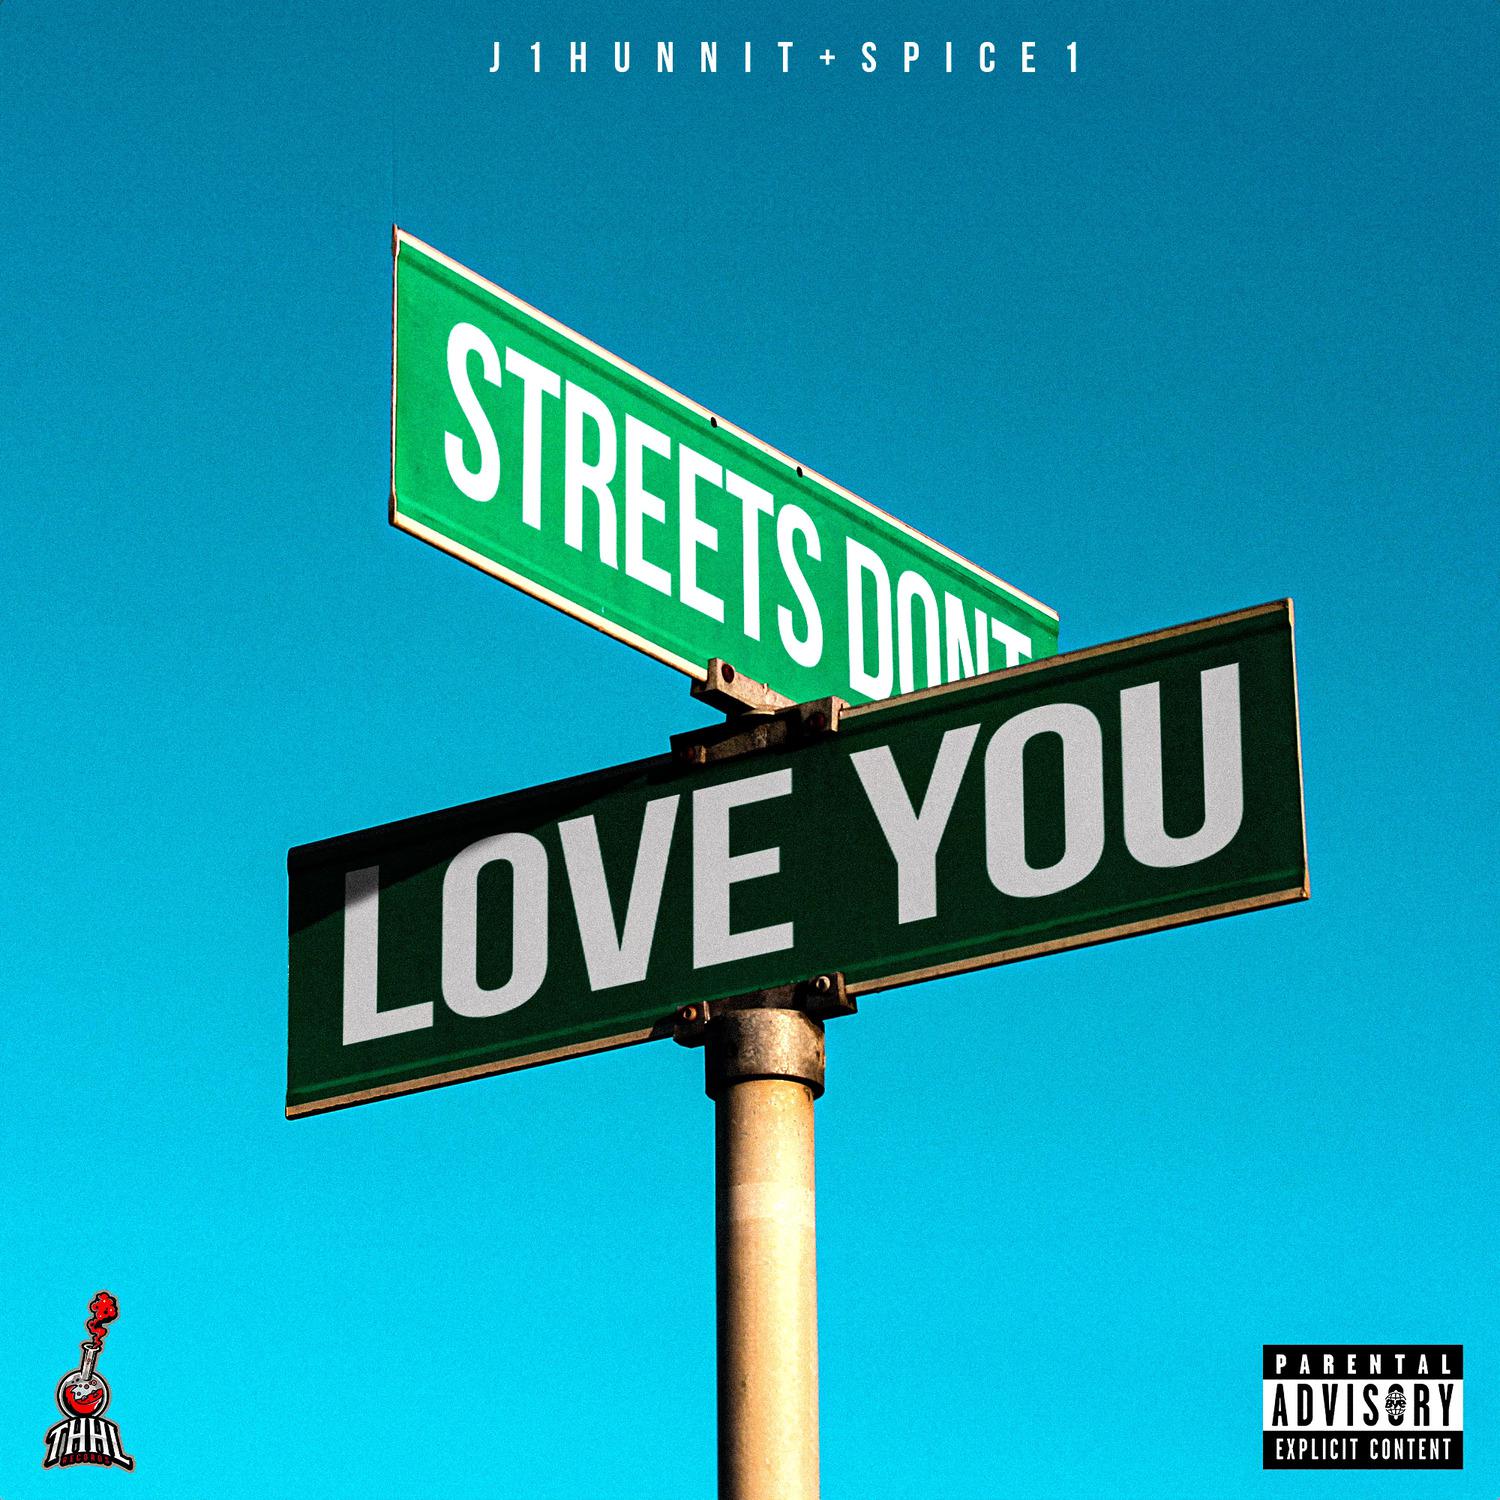 Постер альбома Streets Don't Love You